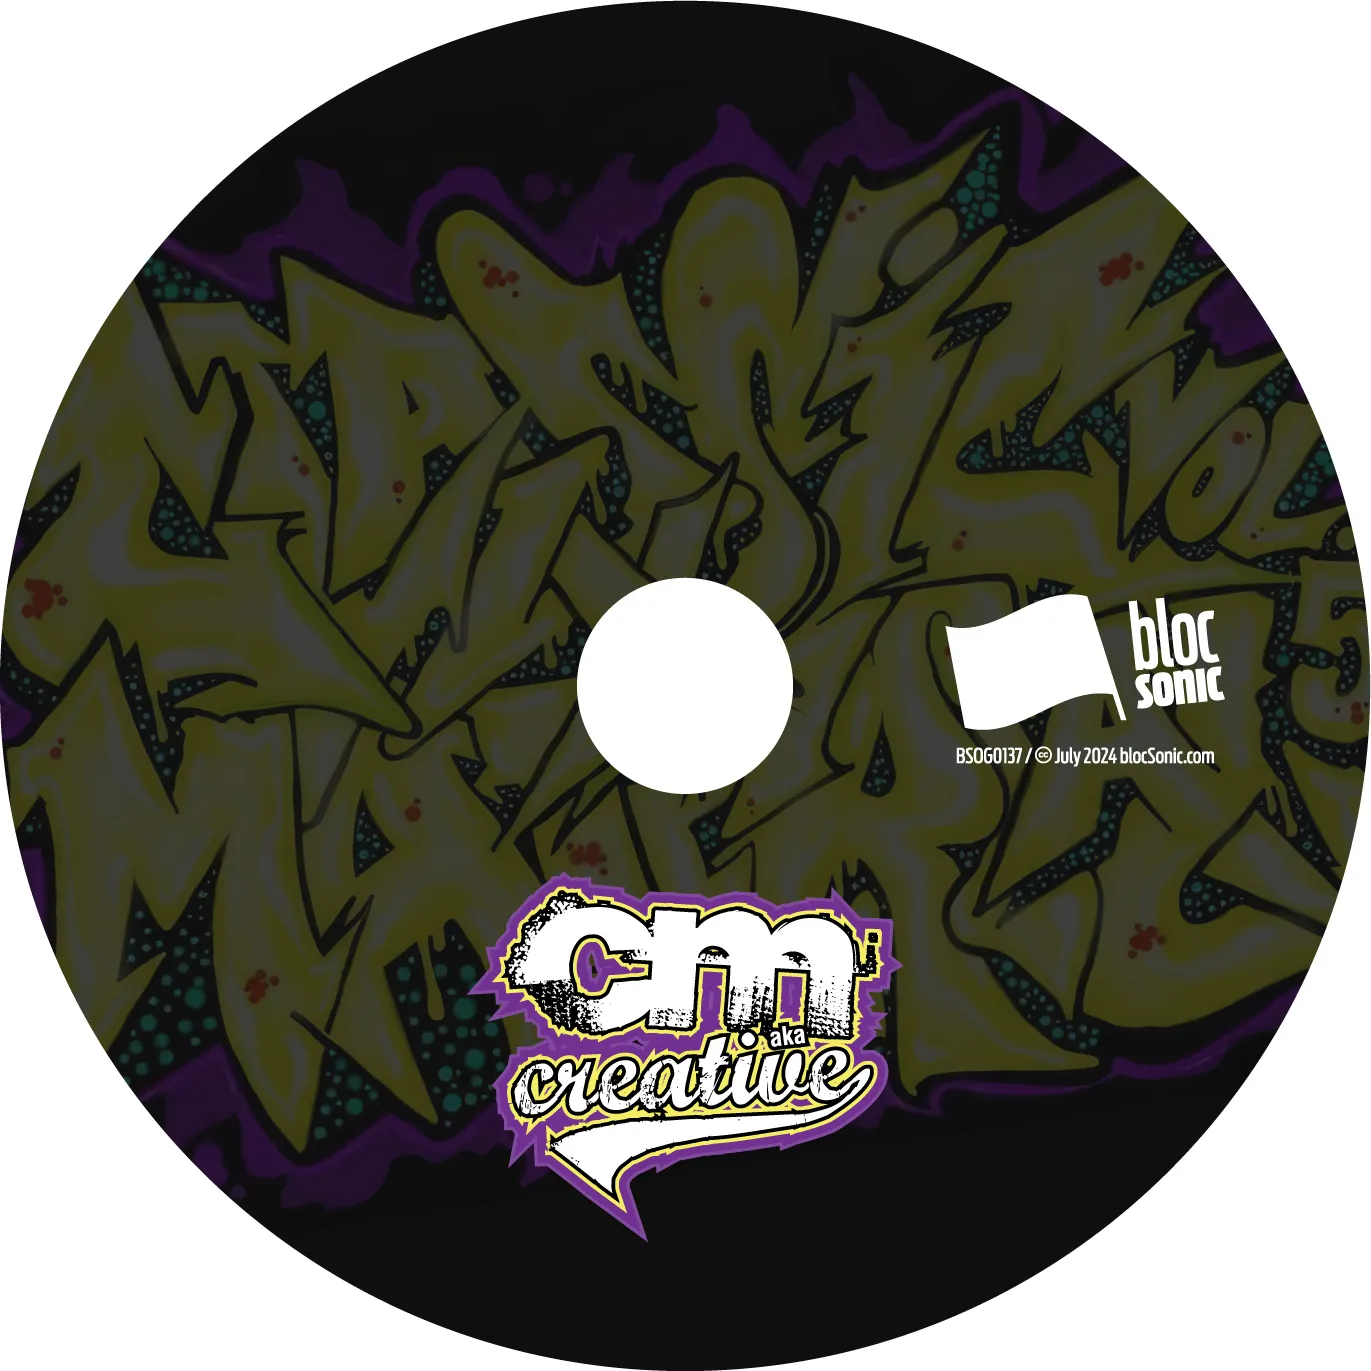 Album disc art for “Classic Material Vol. 5” by CM aka Creative